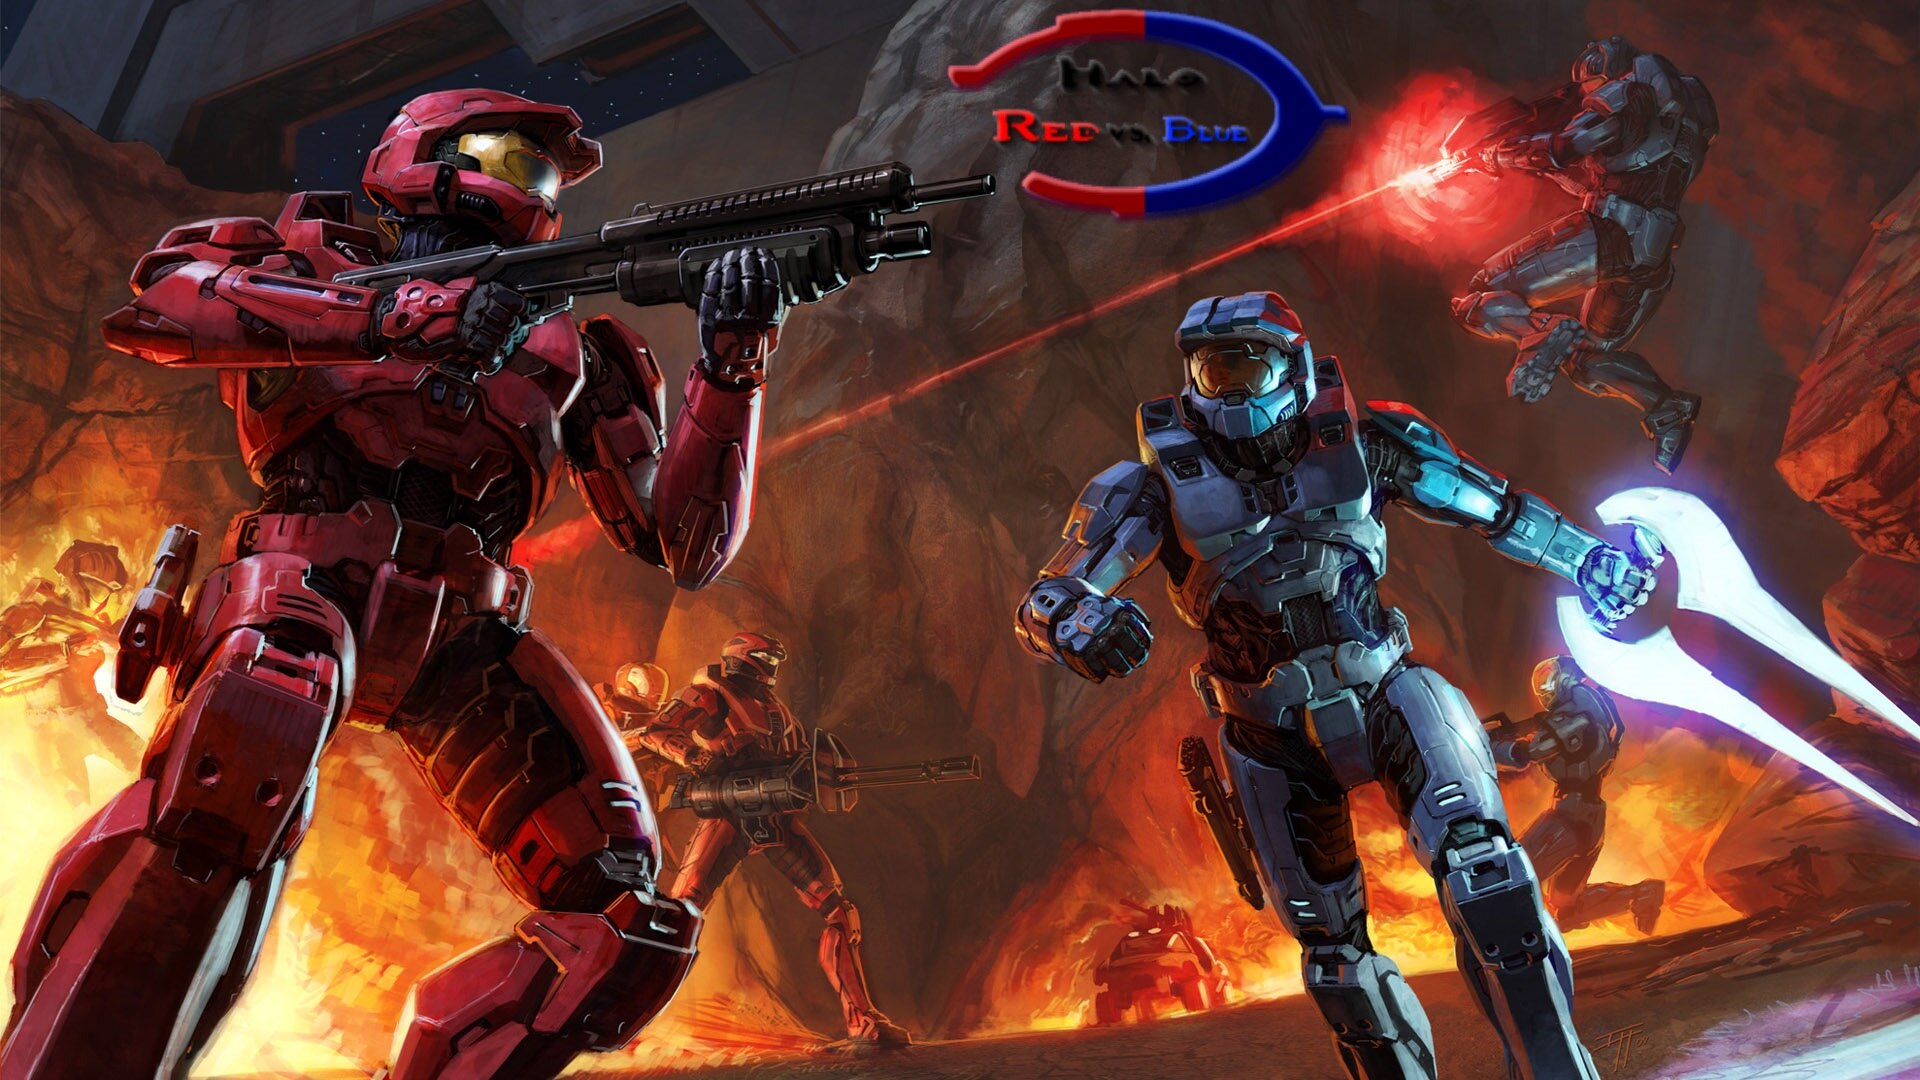 Red vs Blue, Halo Alpha